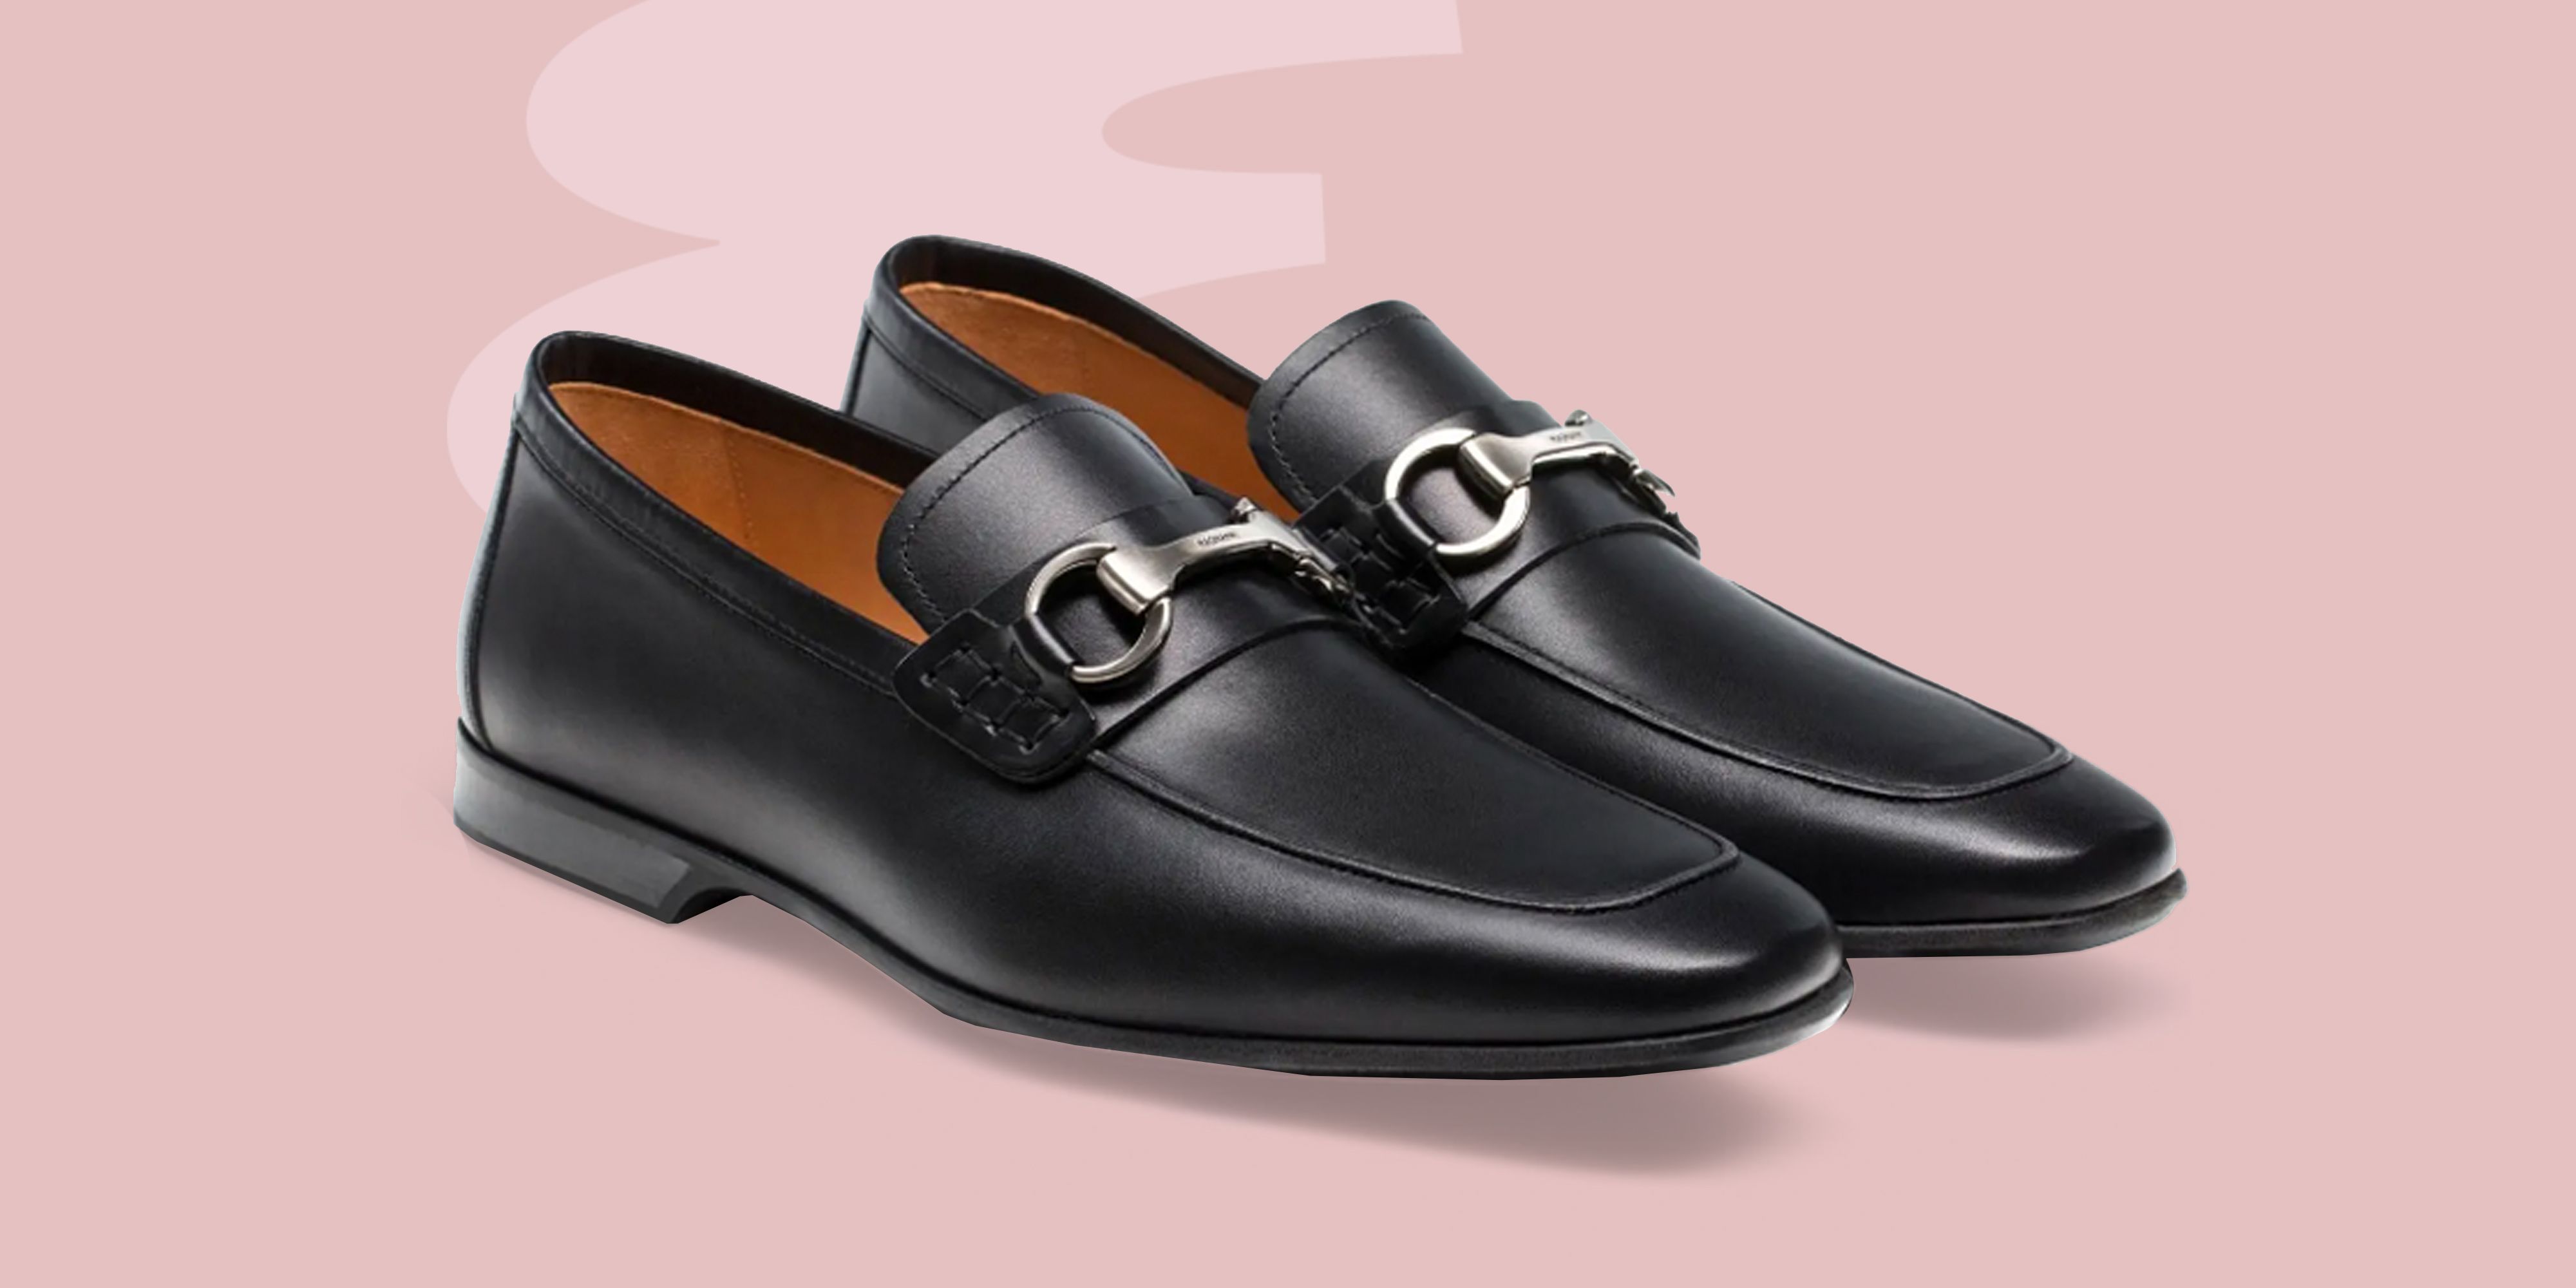 Loafers For Men - Buy Loafers For Men Online Starting at Just ₹206